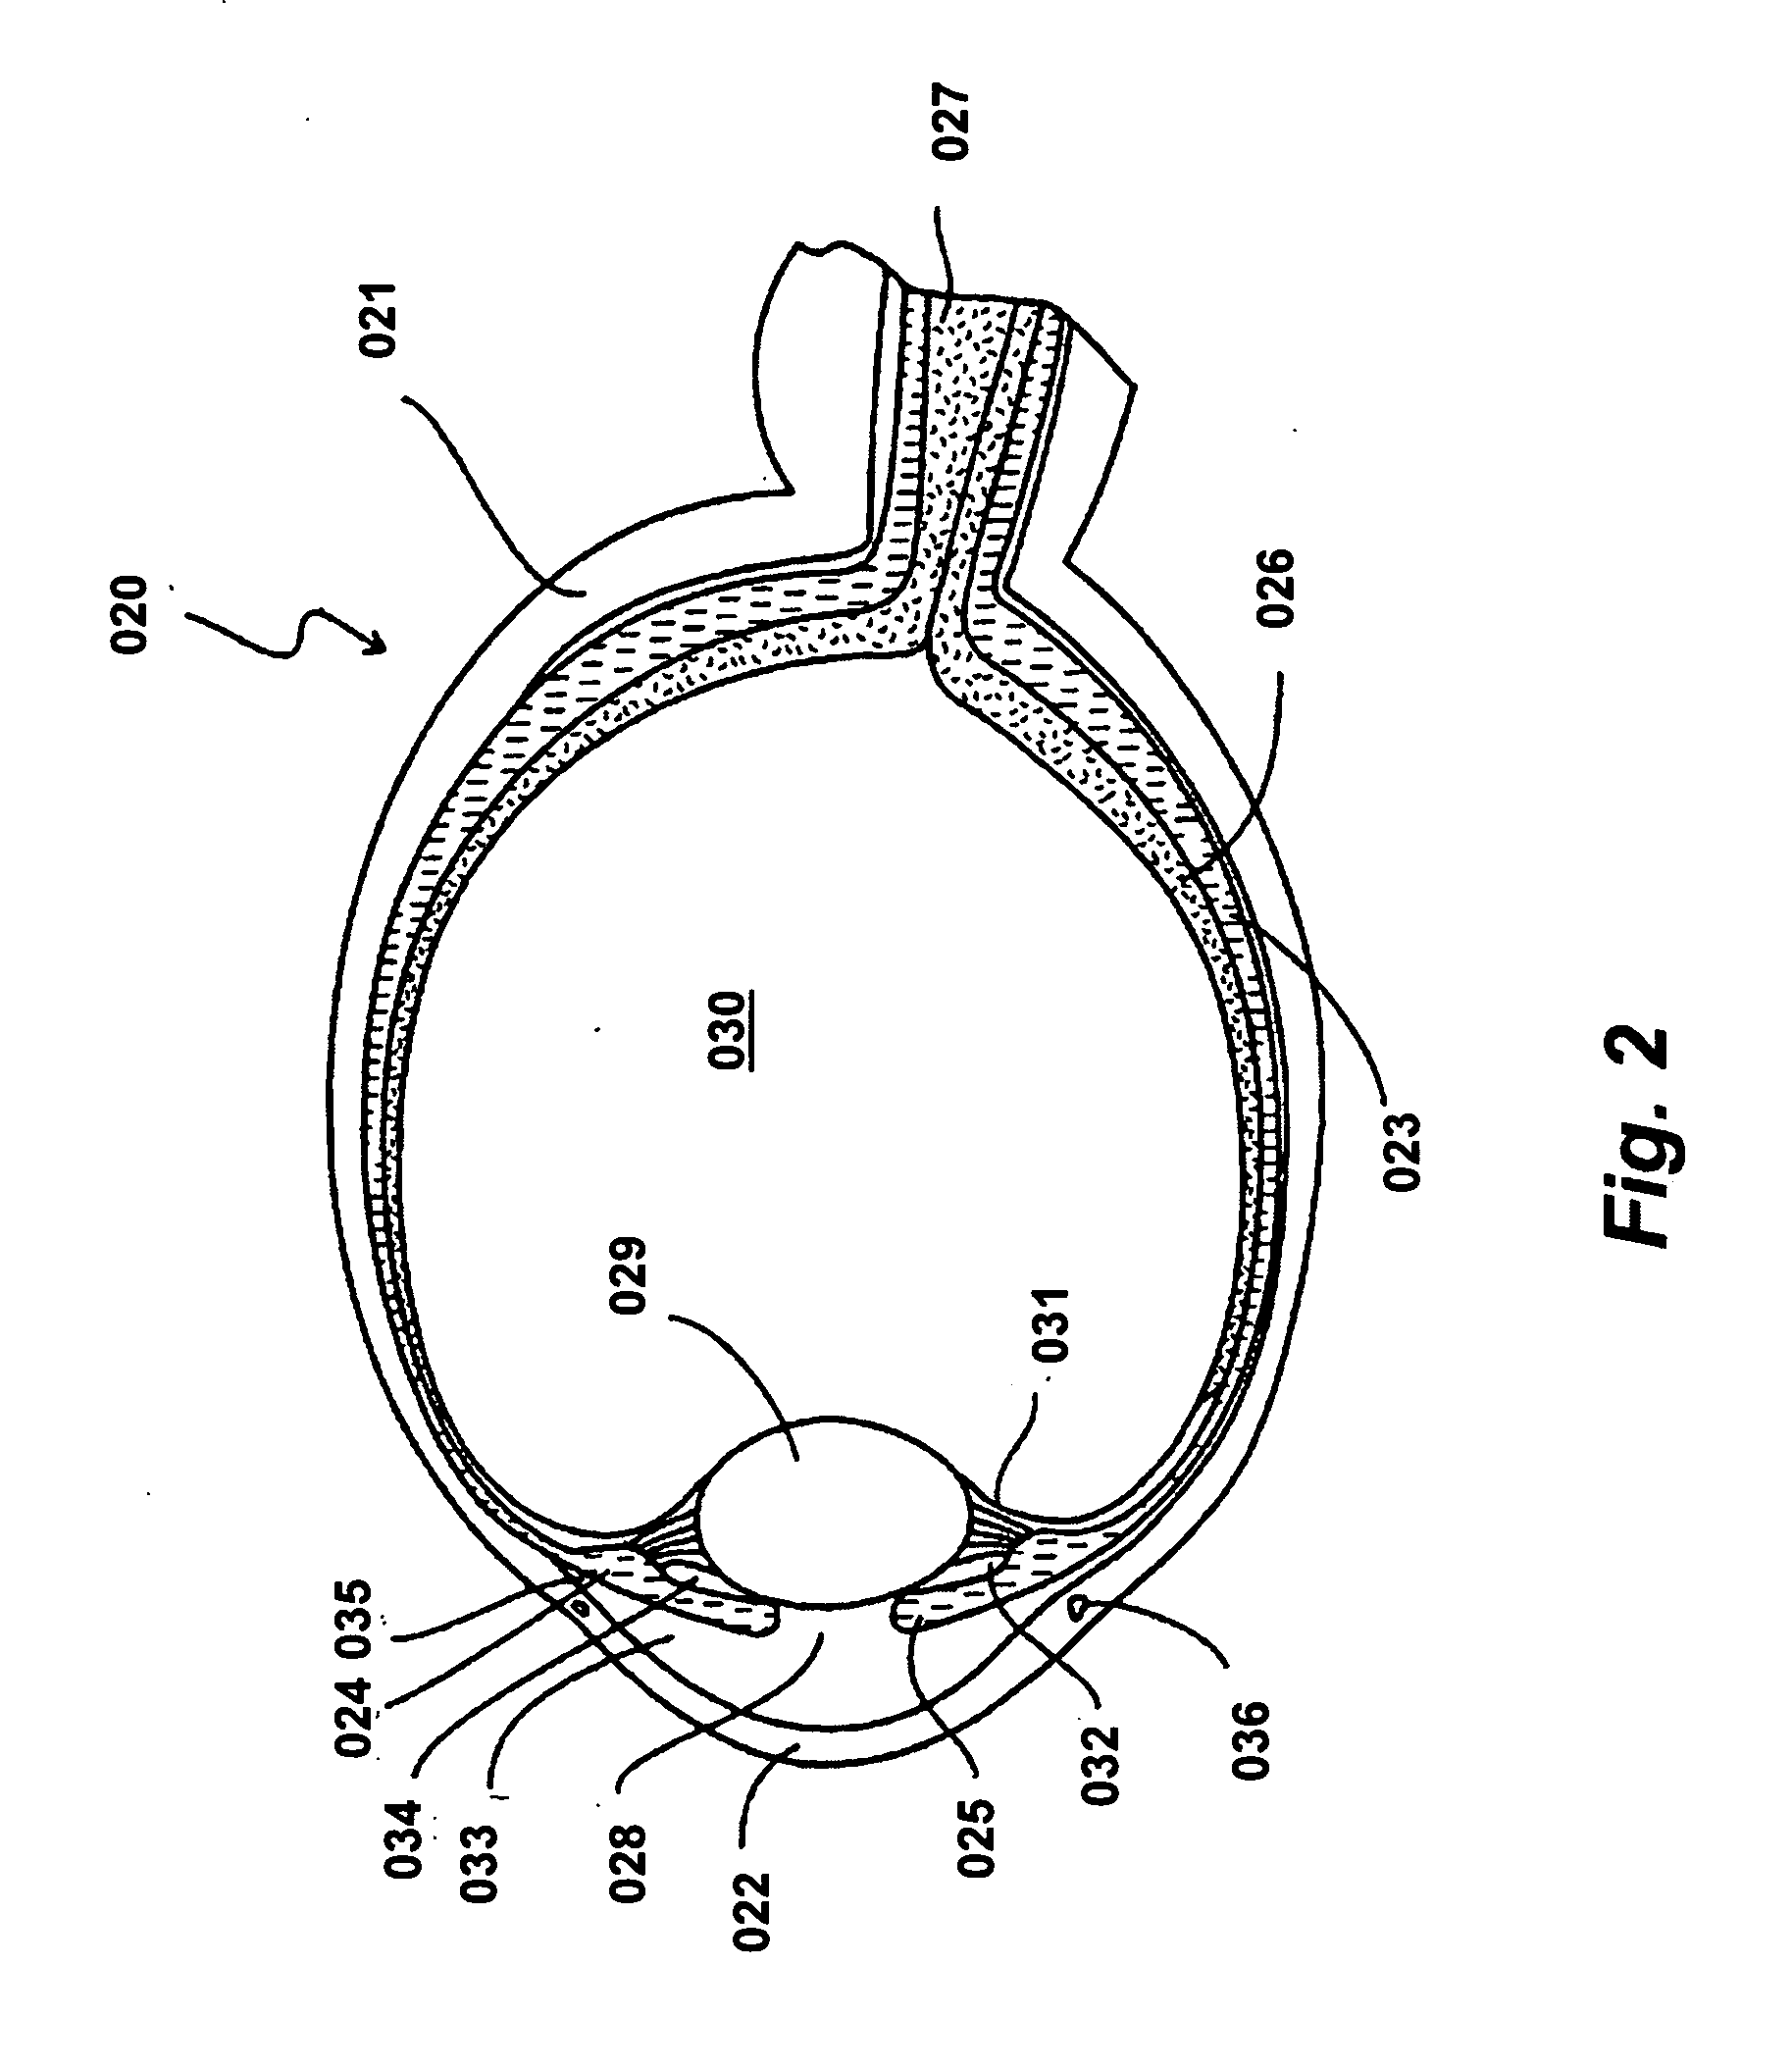 Foldable intraocular lens with adaptable haptics